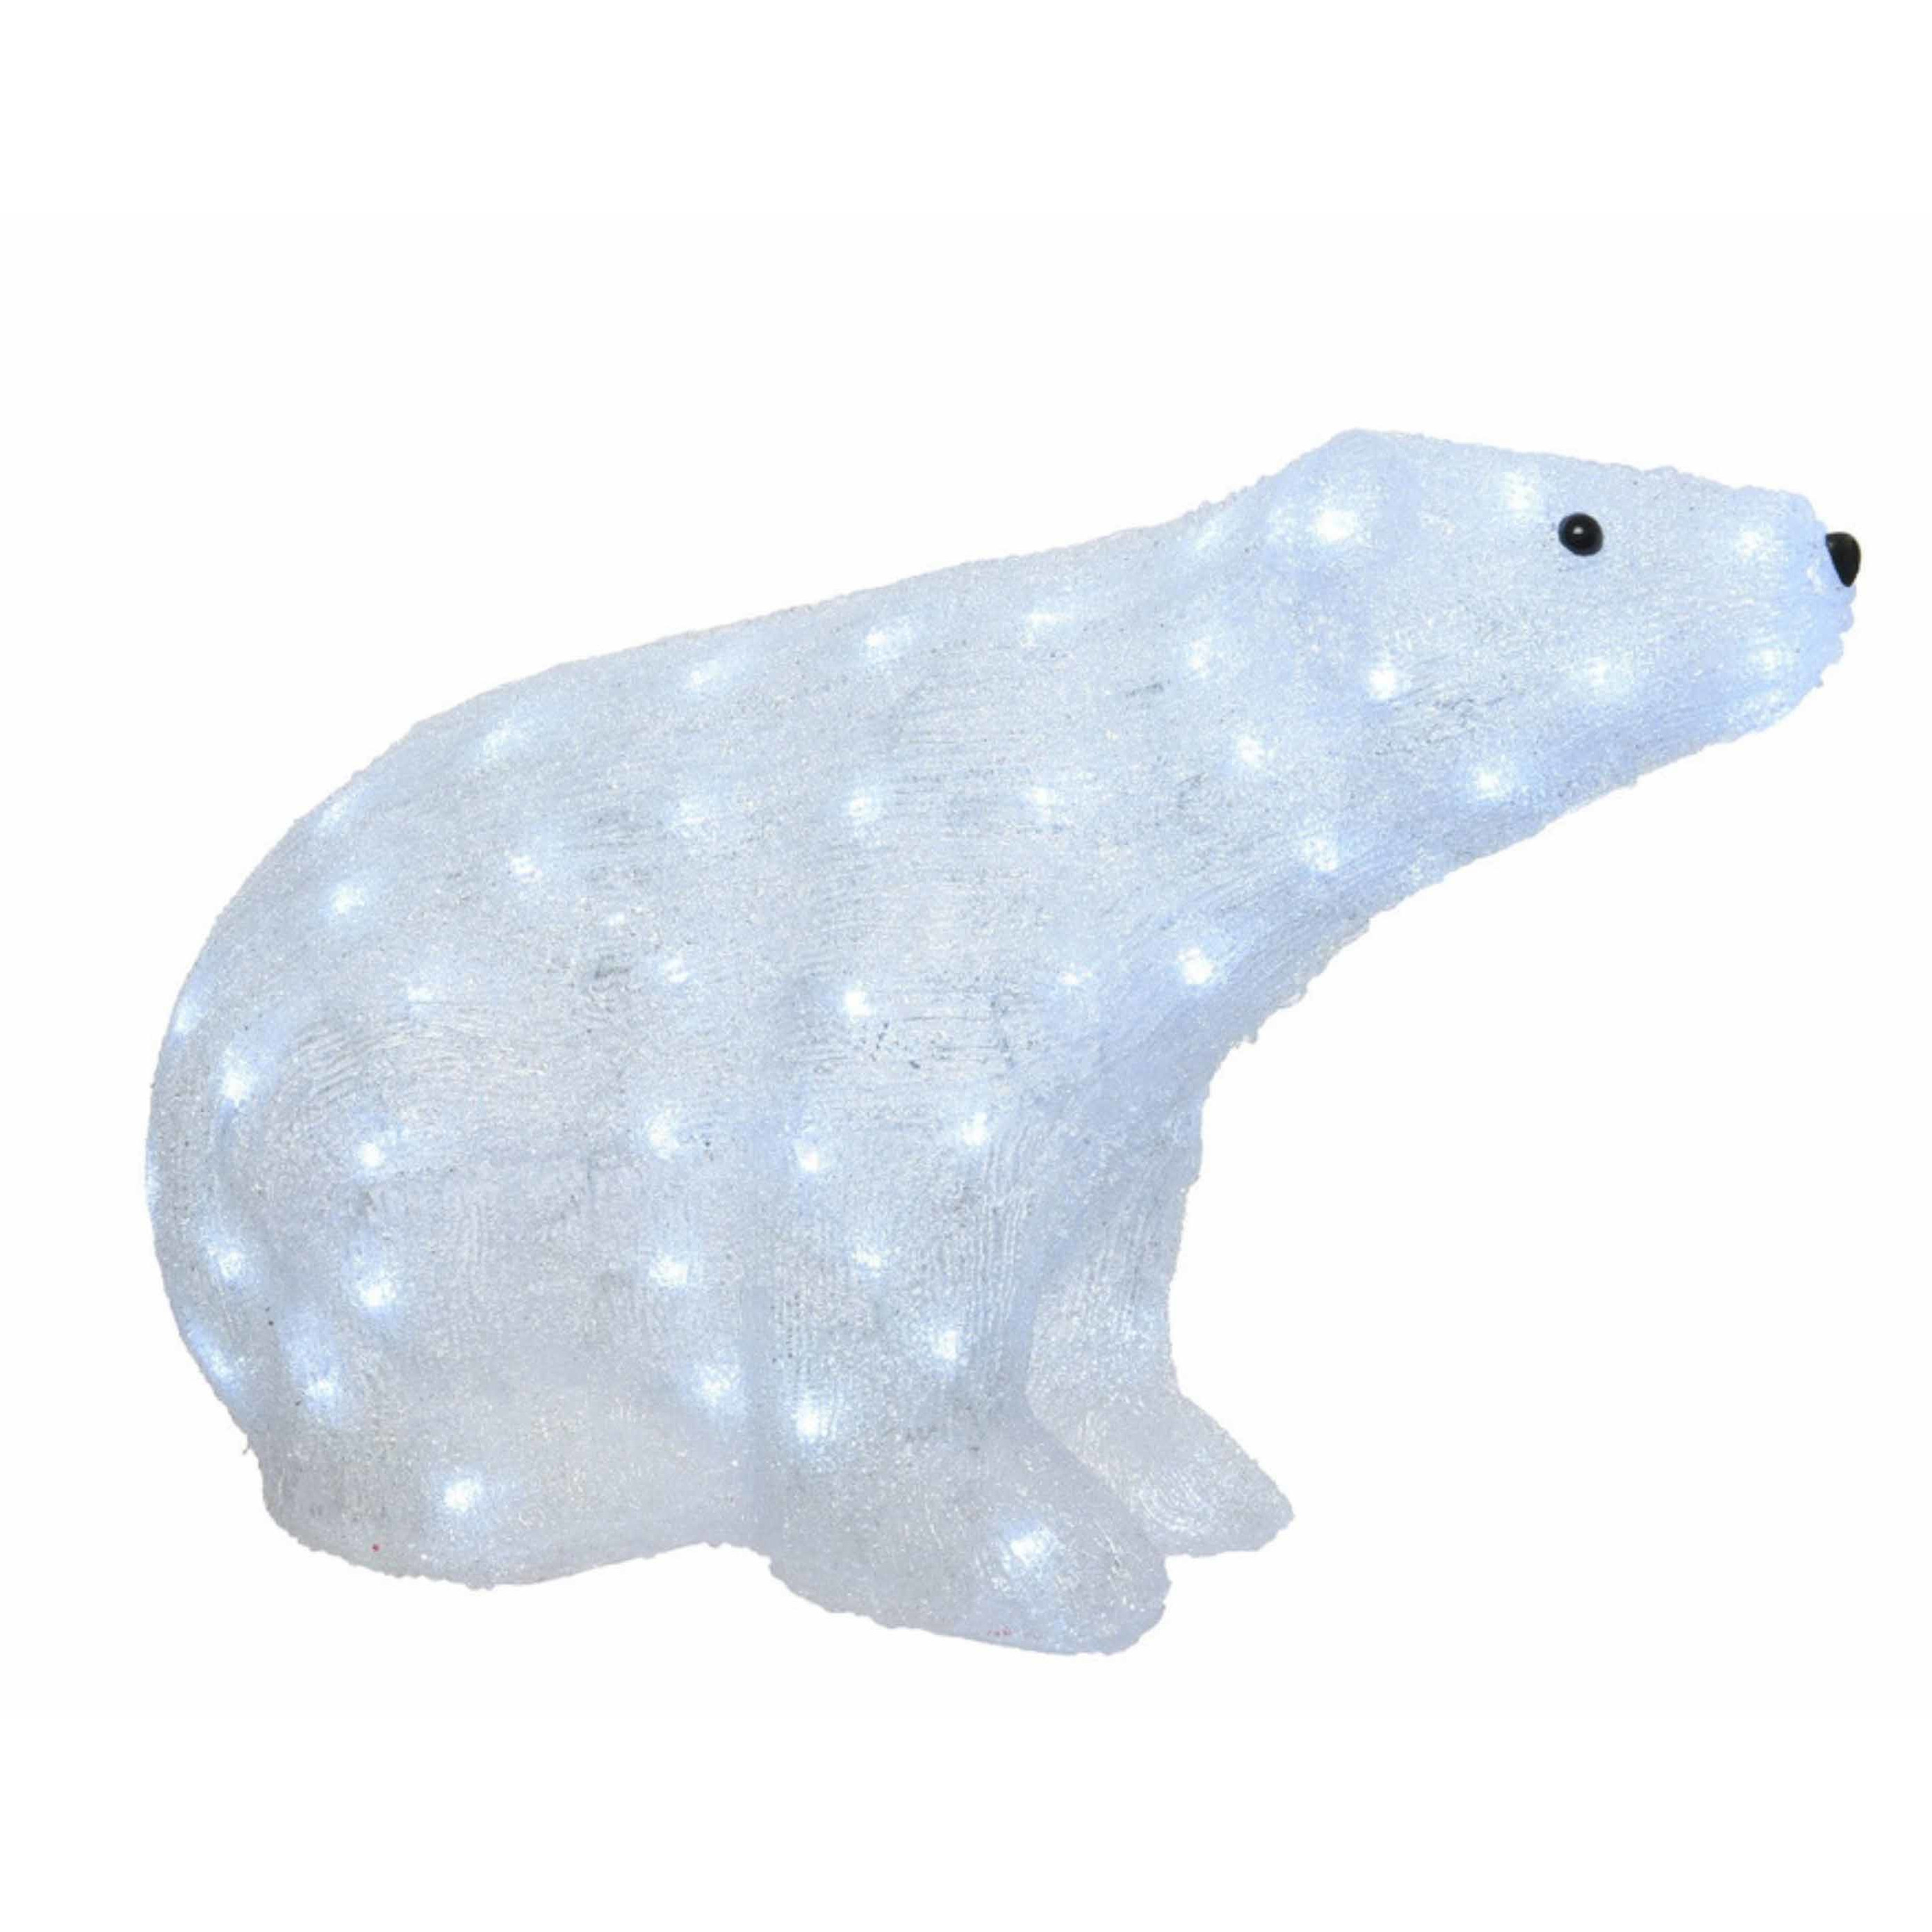 1x LED acryl figuren ijsbeer 60 x 40 cm